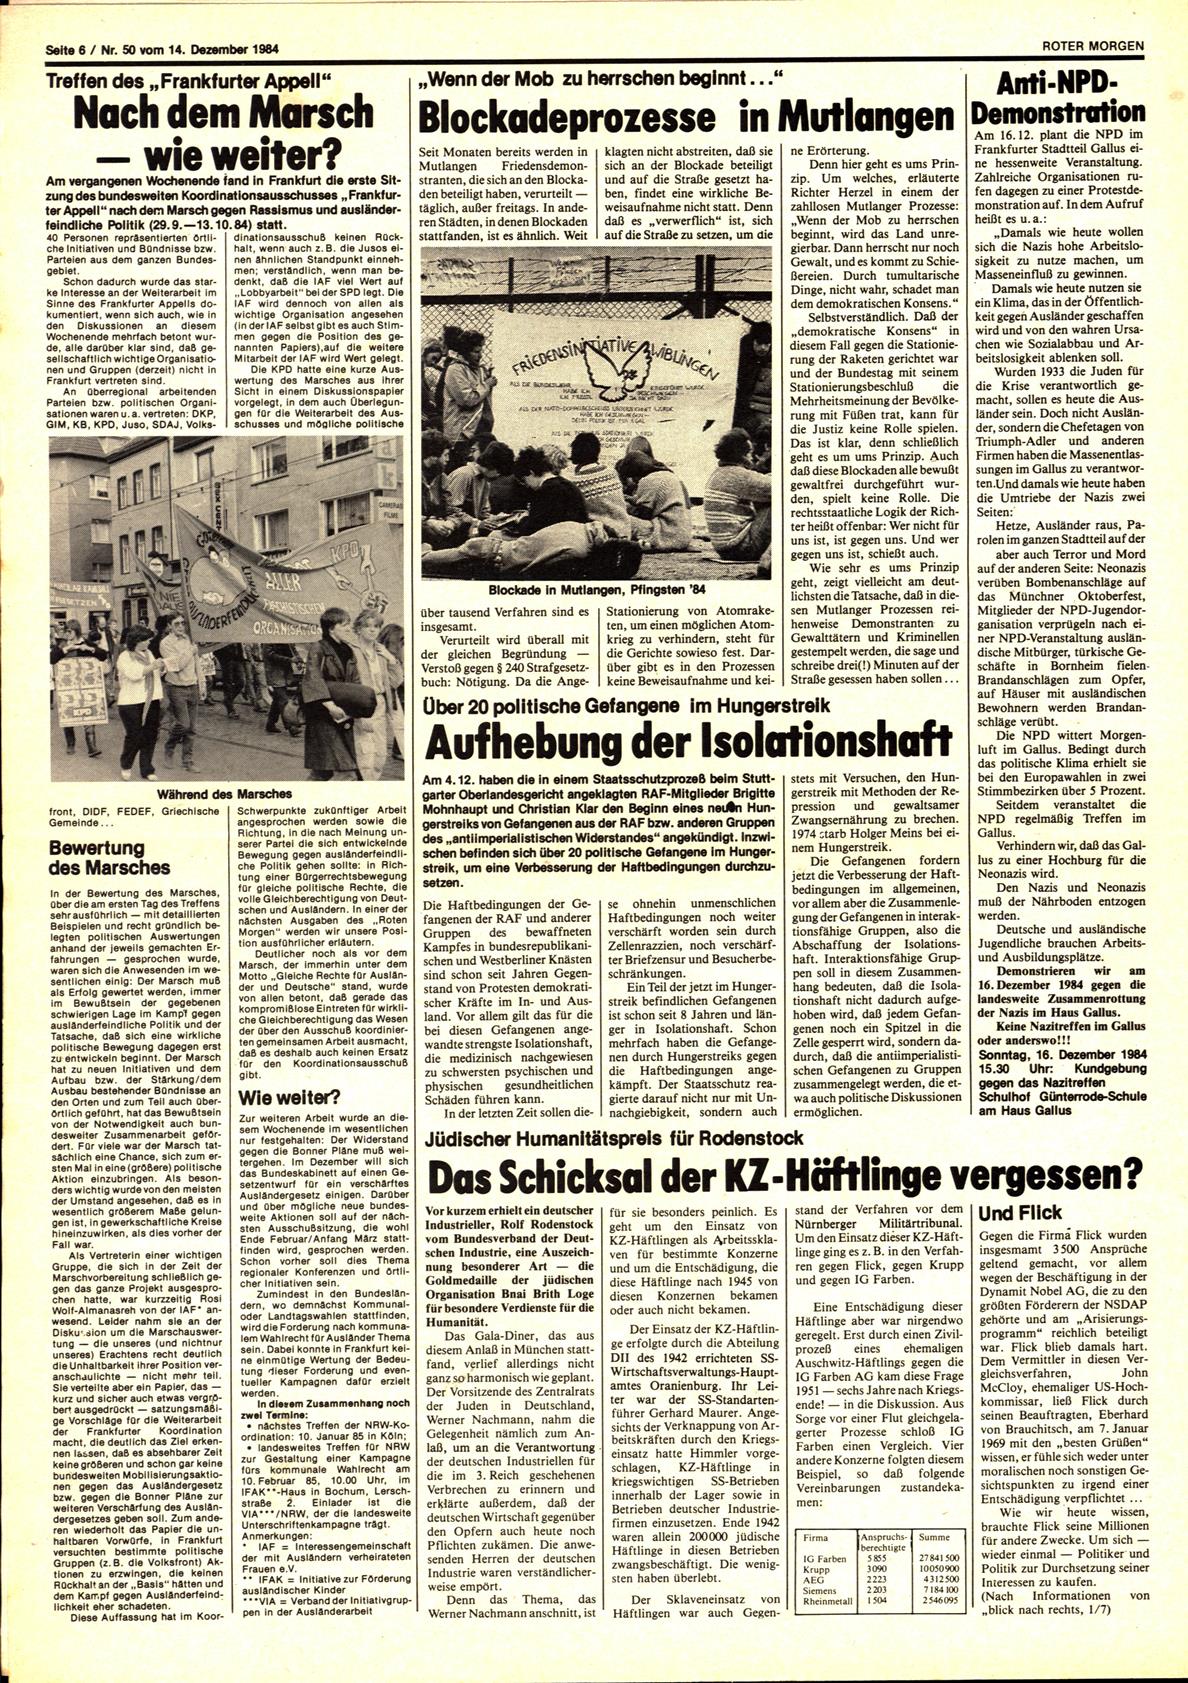 Roter Morgen, 18. Jg., 14. Dezember 1984, Nr. 50, Seite 6